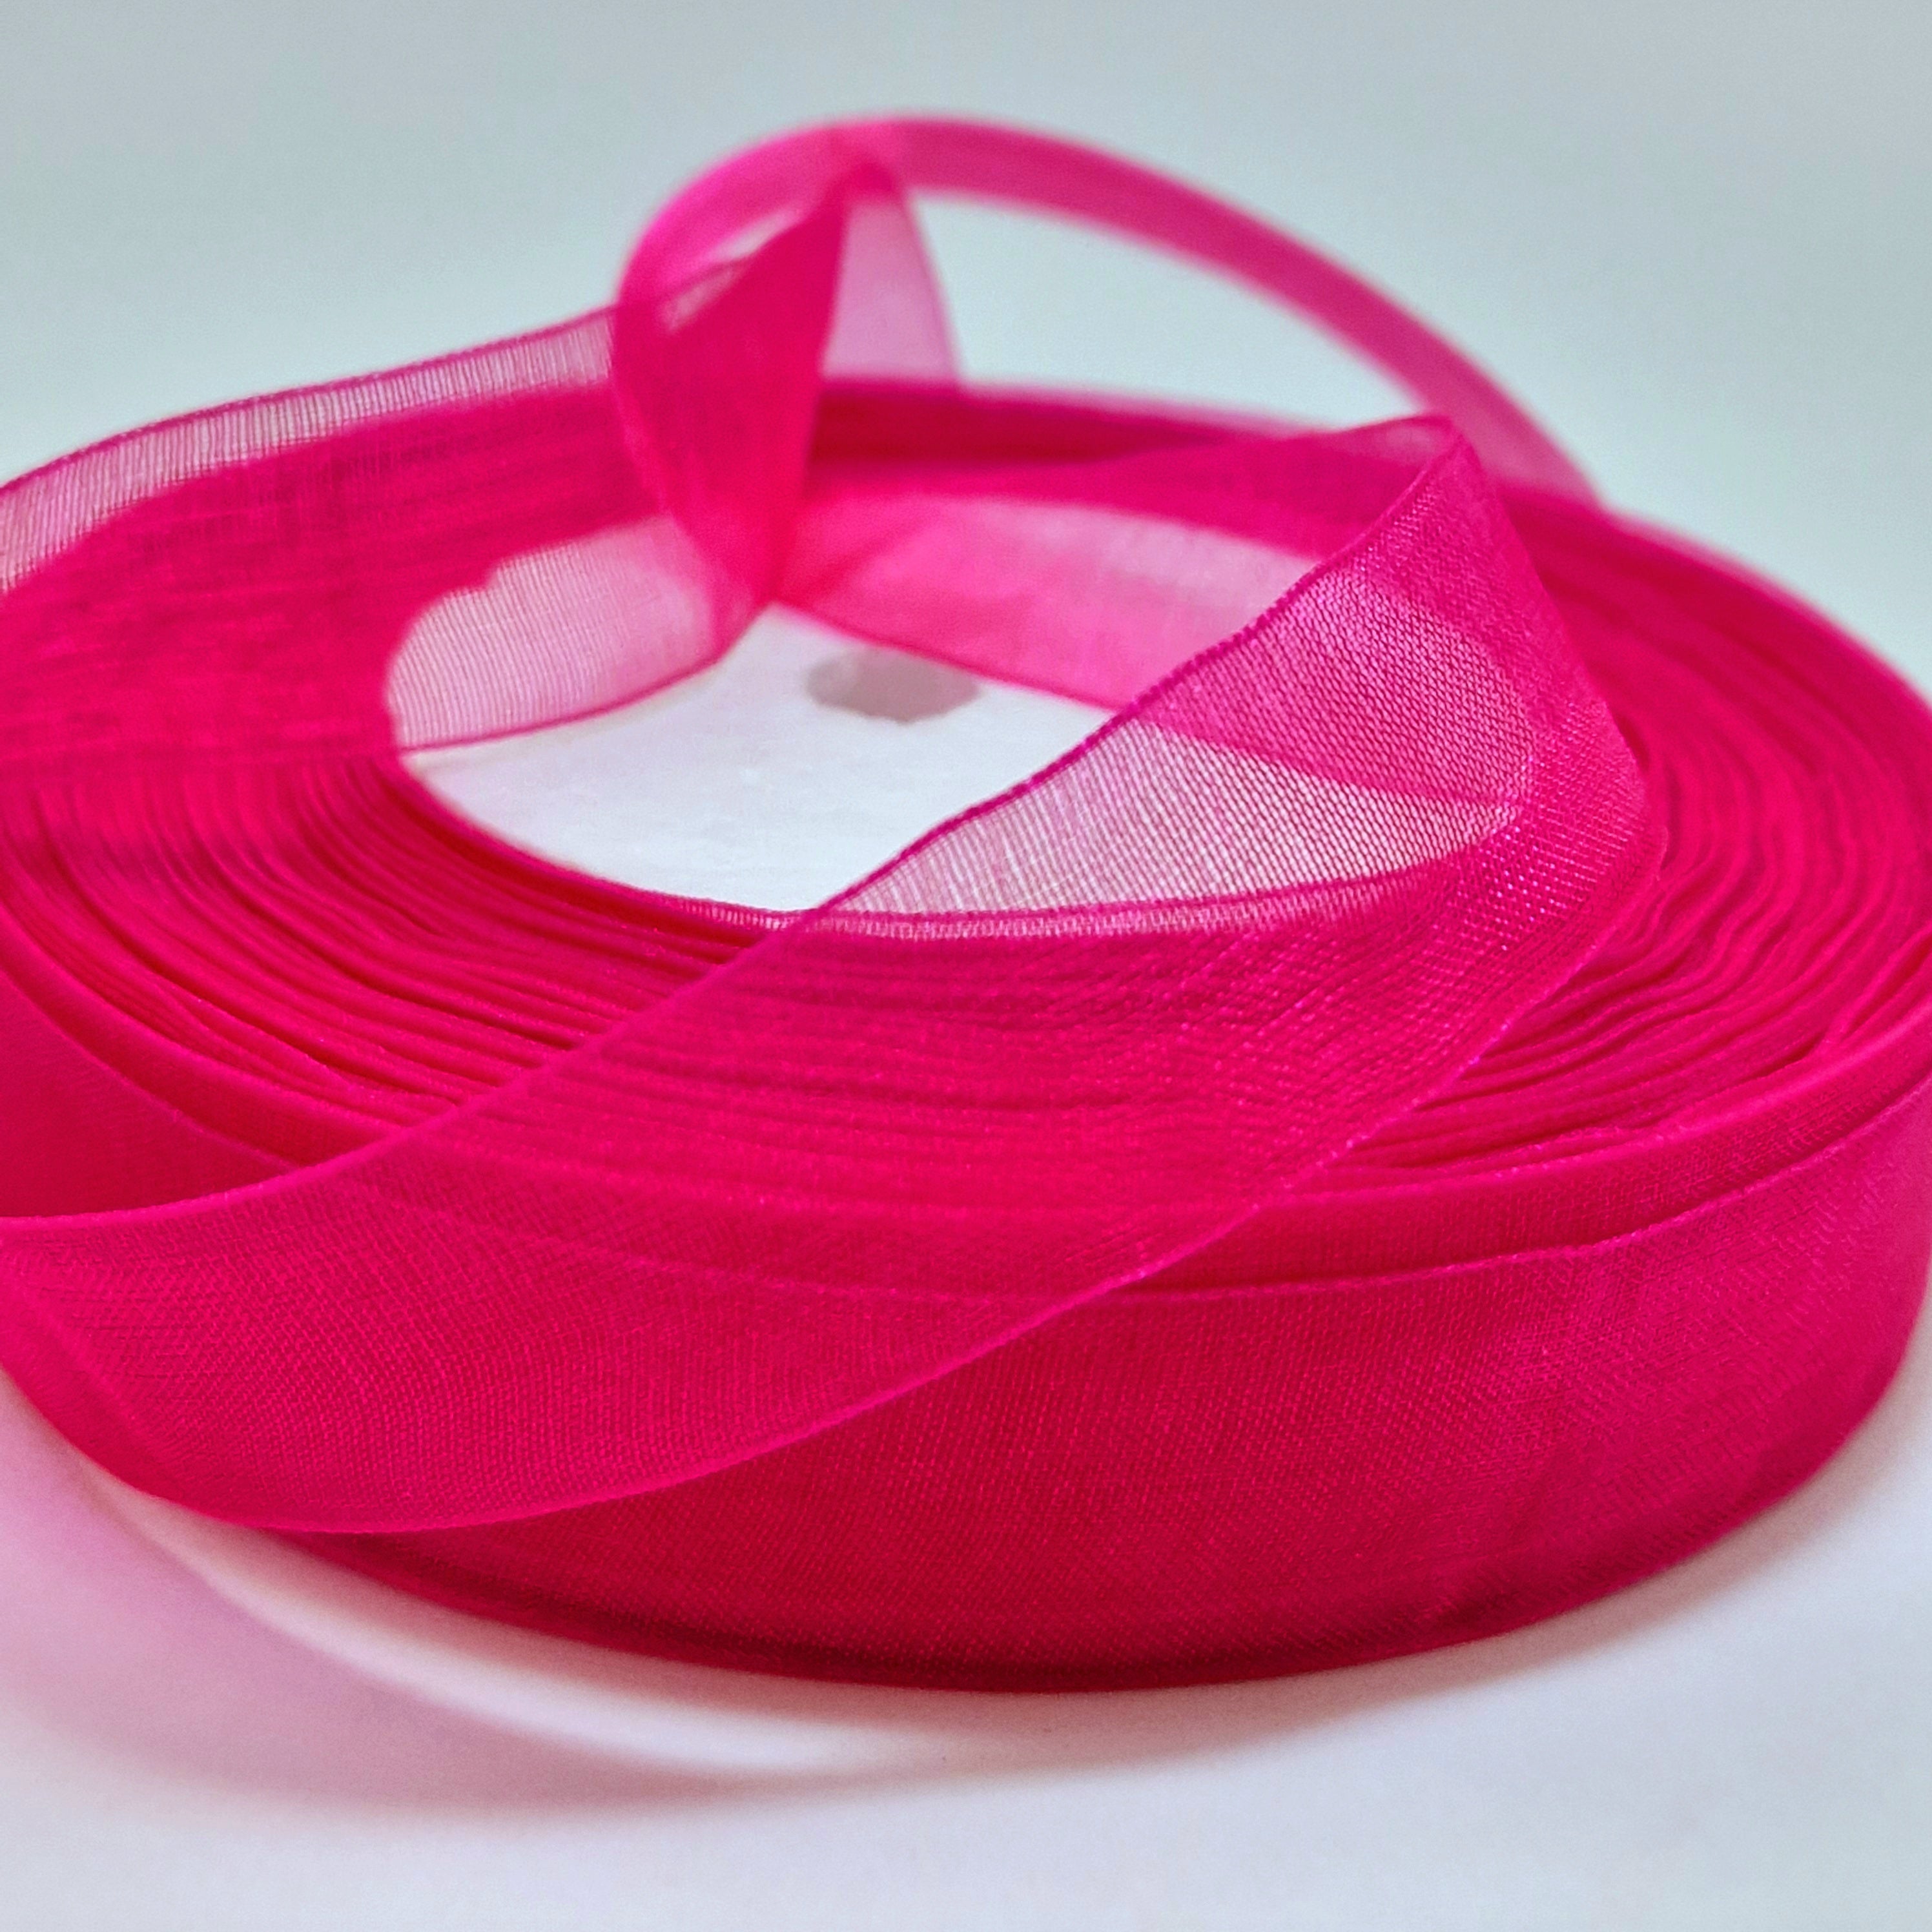 MajorCrafts 20mm 45metres Dark Pink Sheer Organza Fabric Ribbon Roll R1028